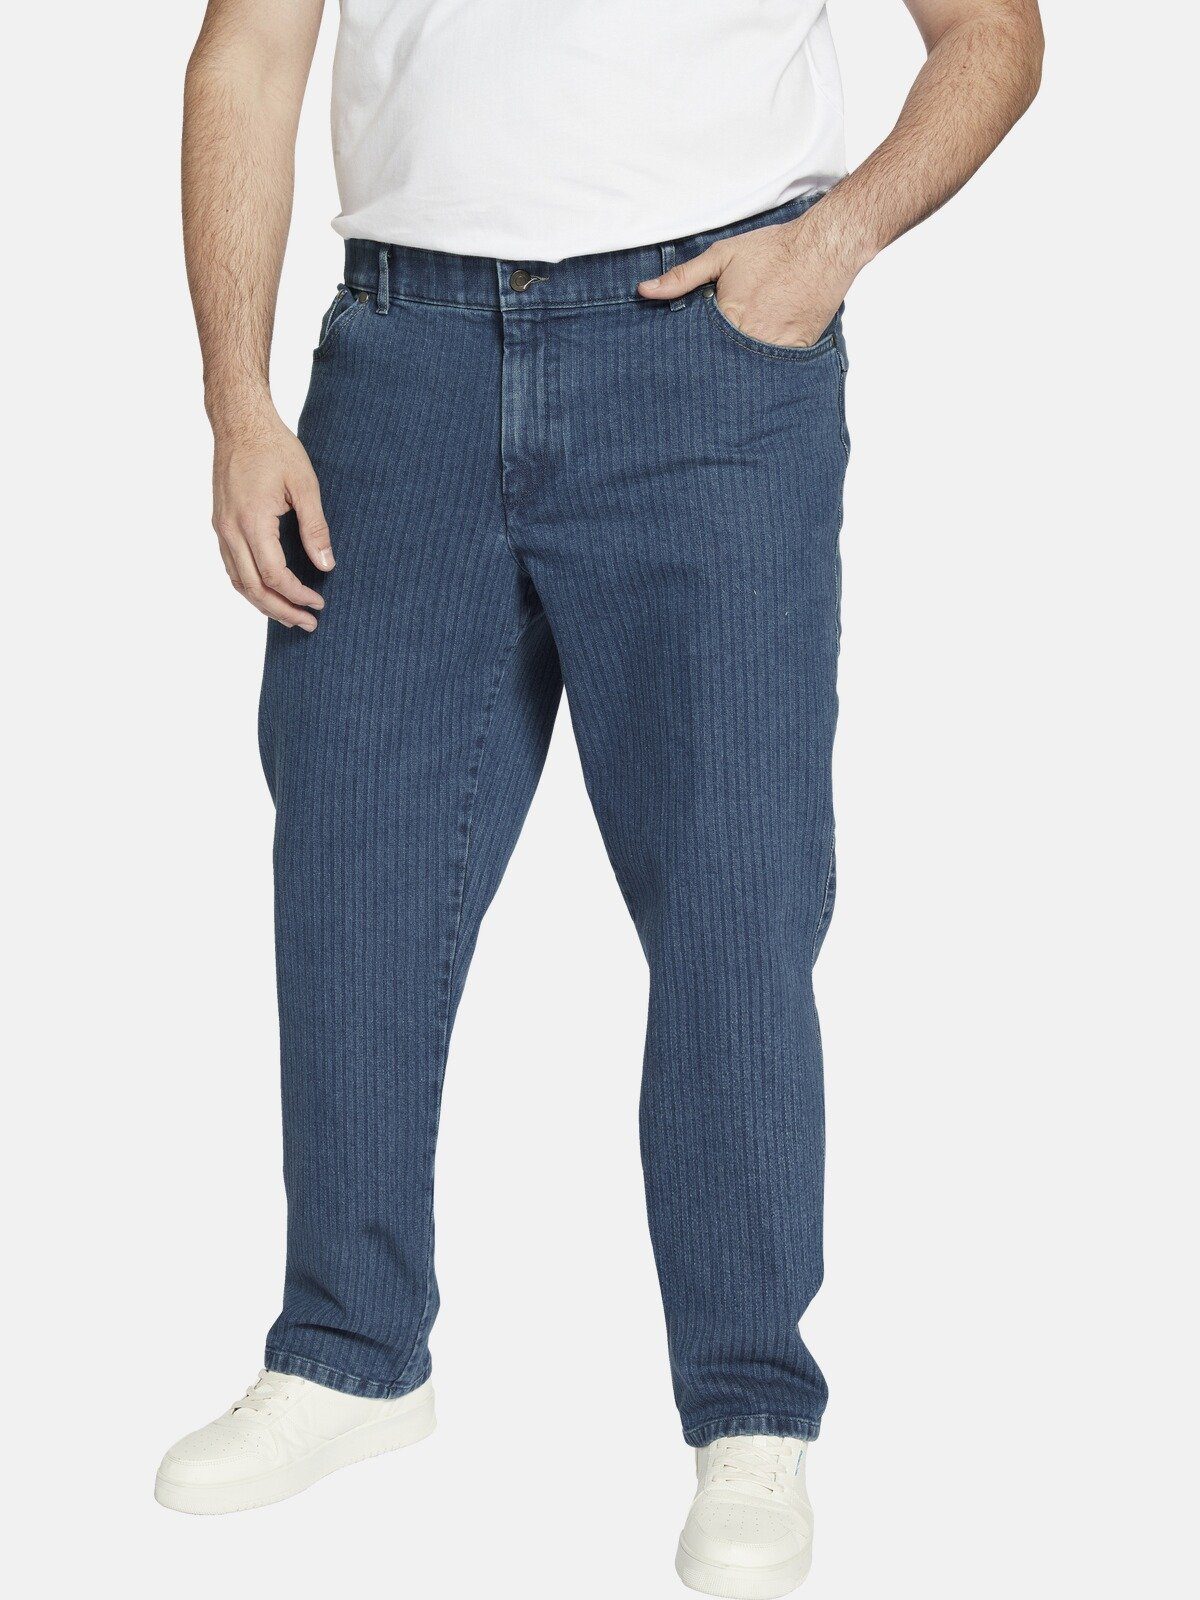 Charles Colby 5-Pocket-Jeans BARON CONNLA mit fünf Taschen | Straight-Fit Jeans